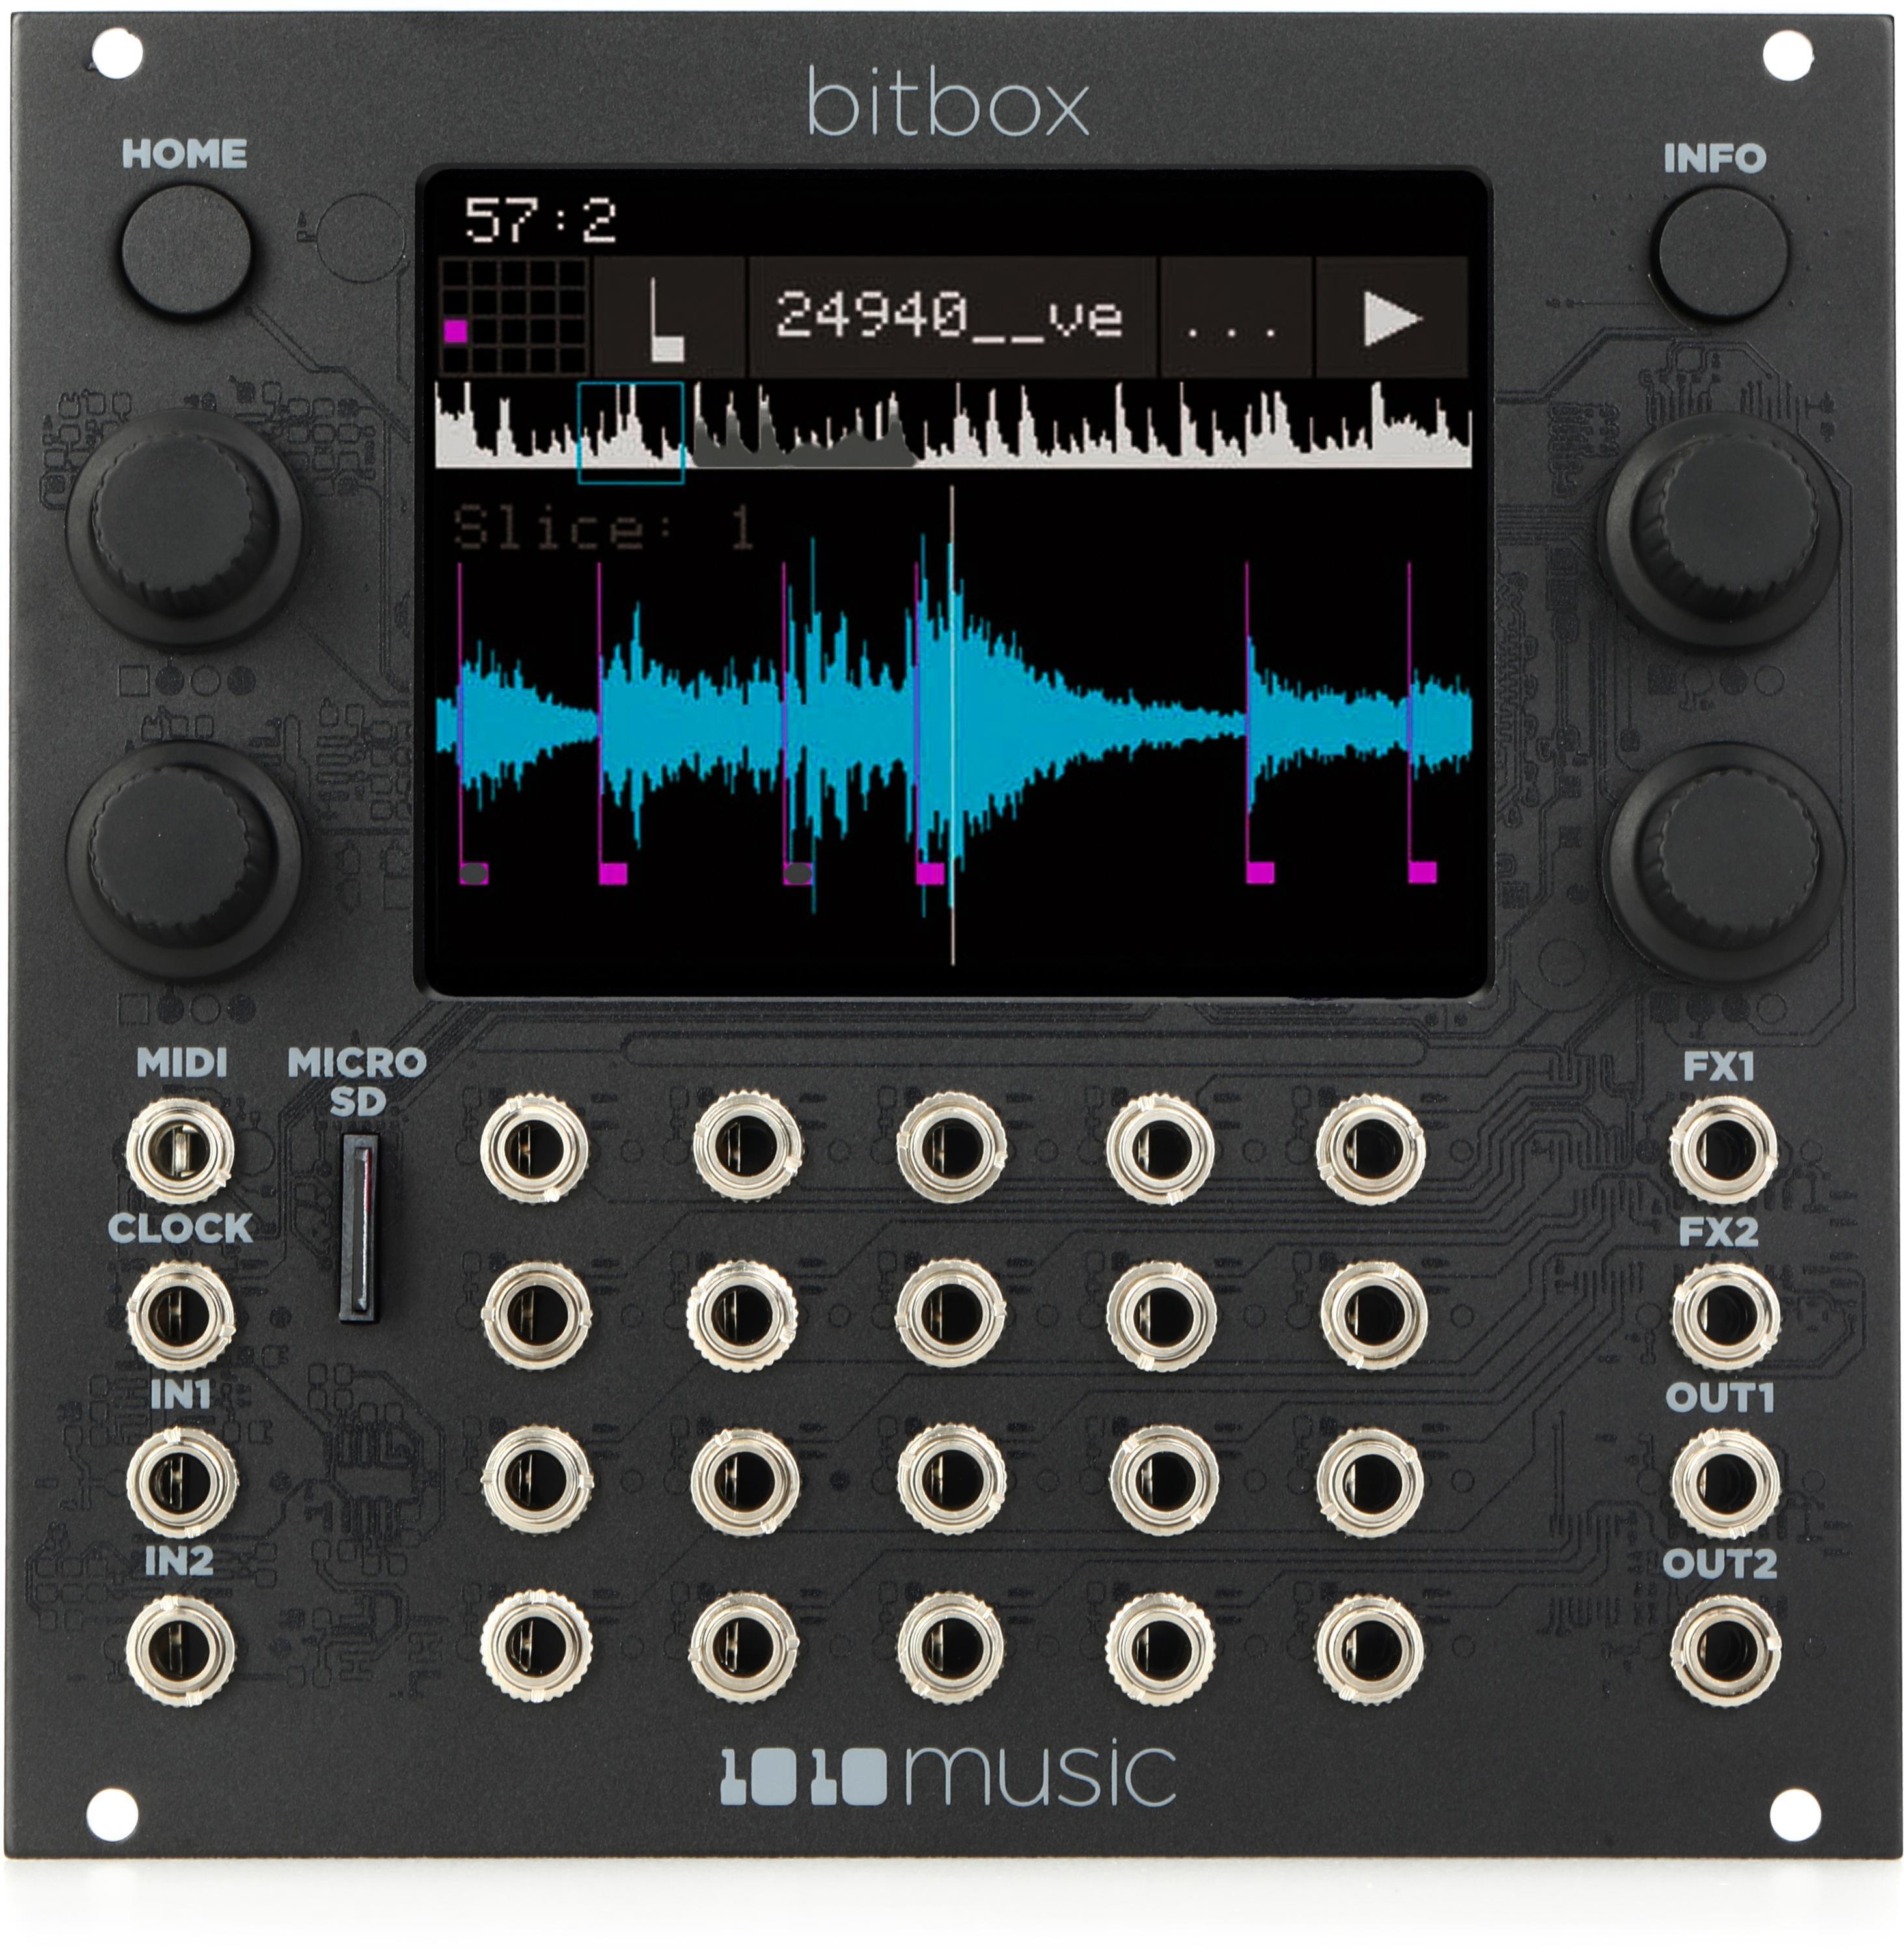 1010music Bitbox mk2 Eurorack Performance Sampler with Touchscreen - Black